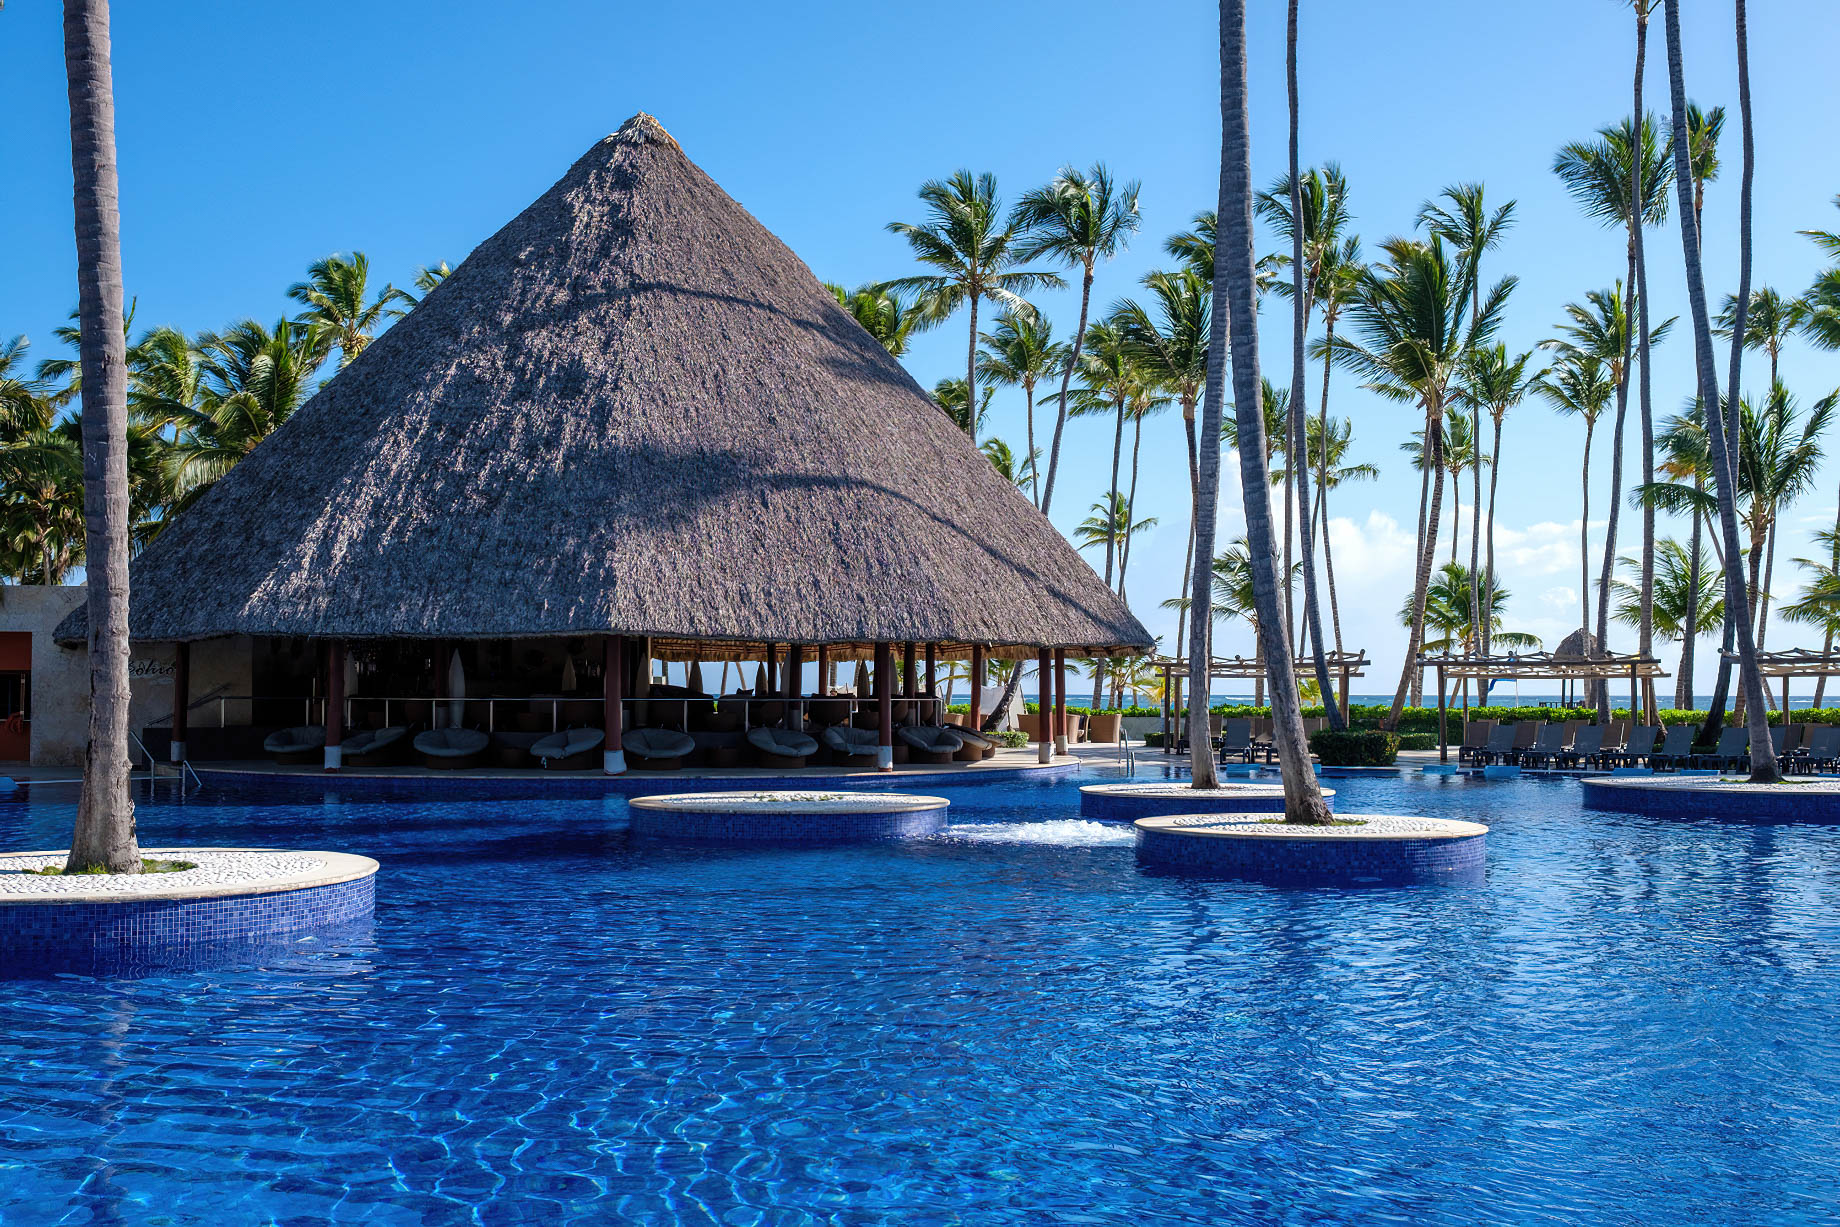 Barceló Bávaro Beach Hotel Grand Resort – Punta Cana, Dominican Republic – Pool